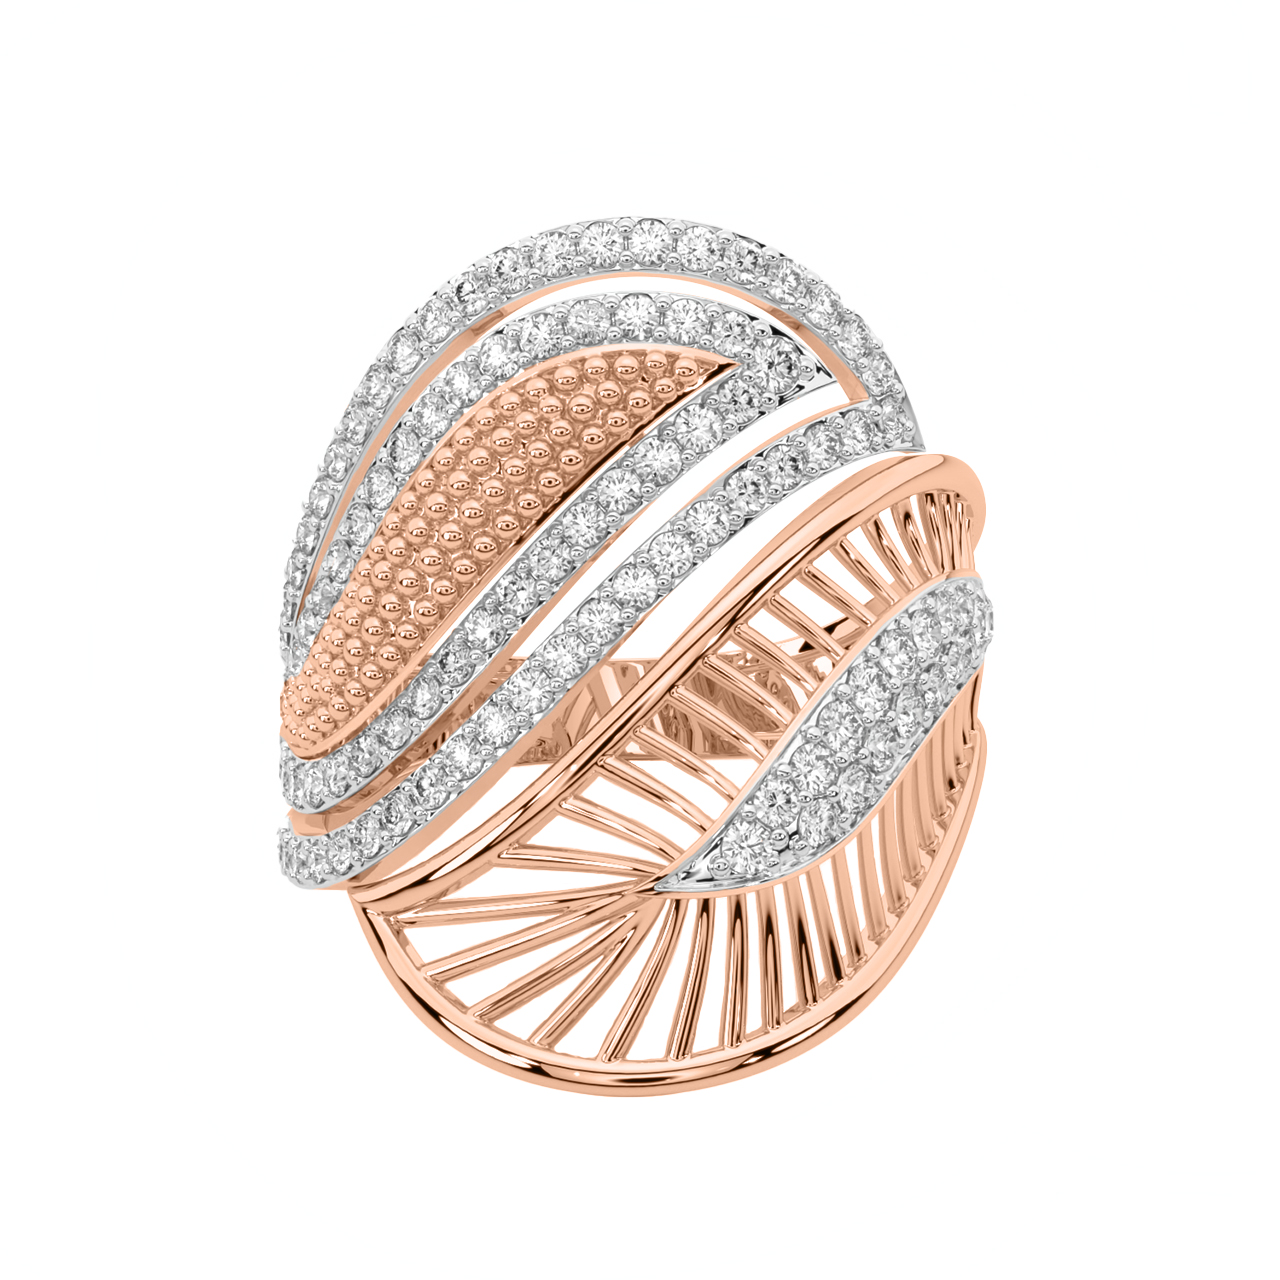 The Layering Design Diamond Ring